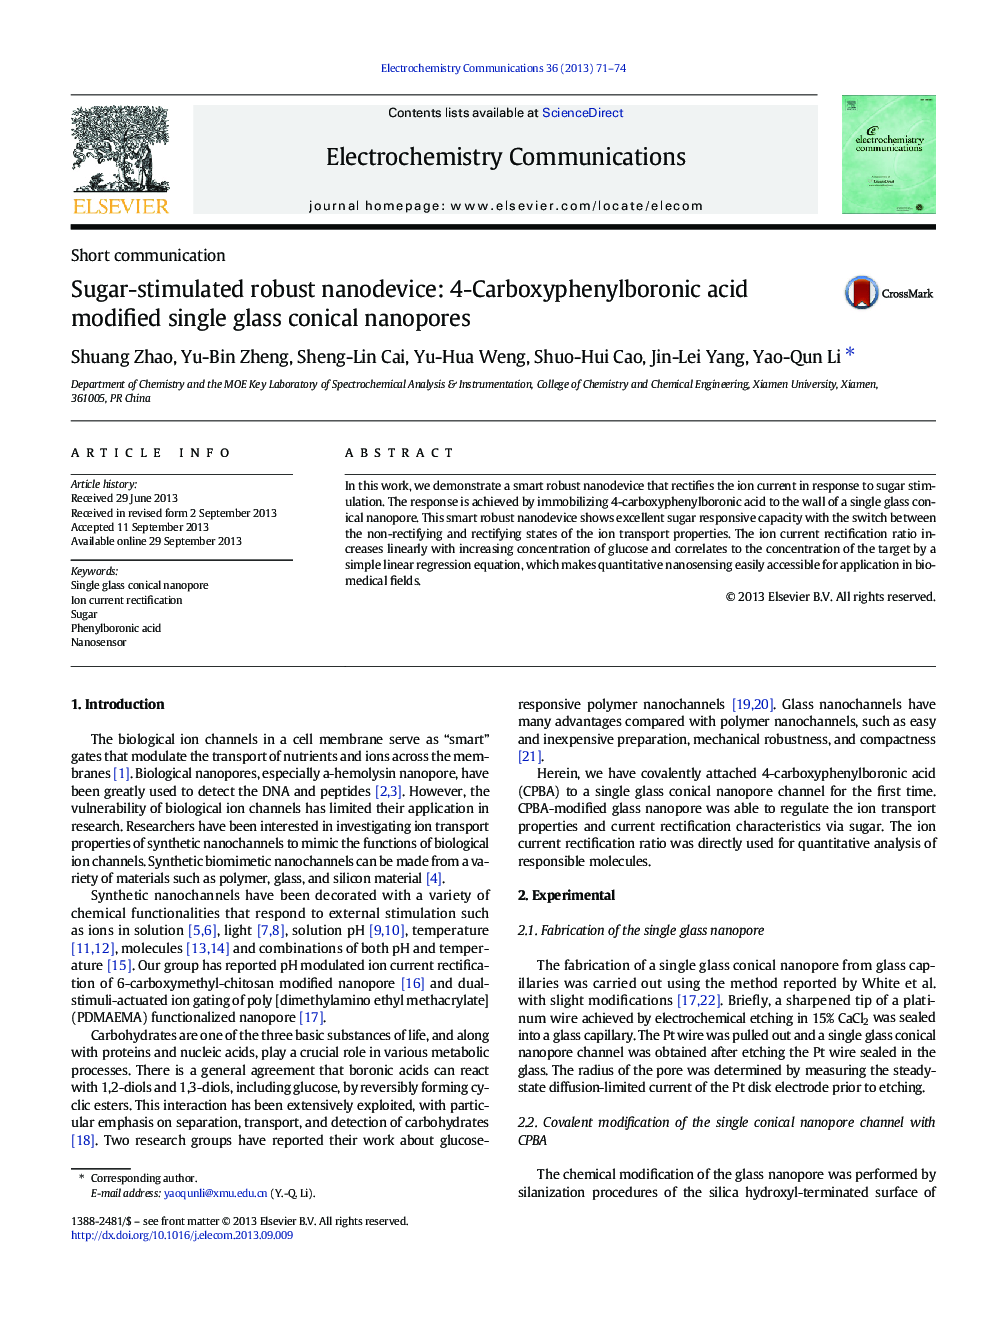 Sugar-stimulated robust nanodevice: 4-Carboxyphenylboronic acid modified single glass conical nanopores